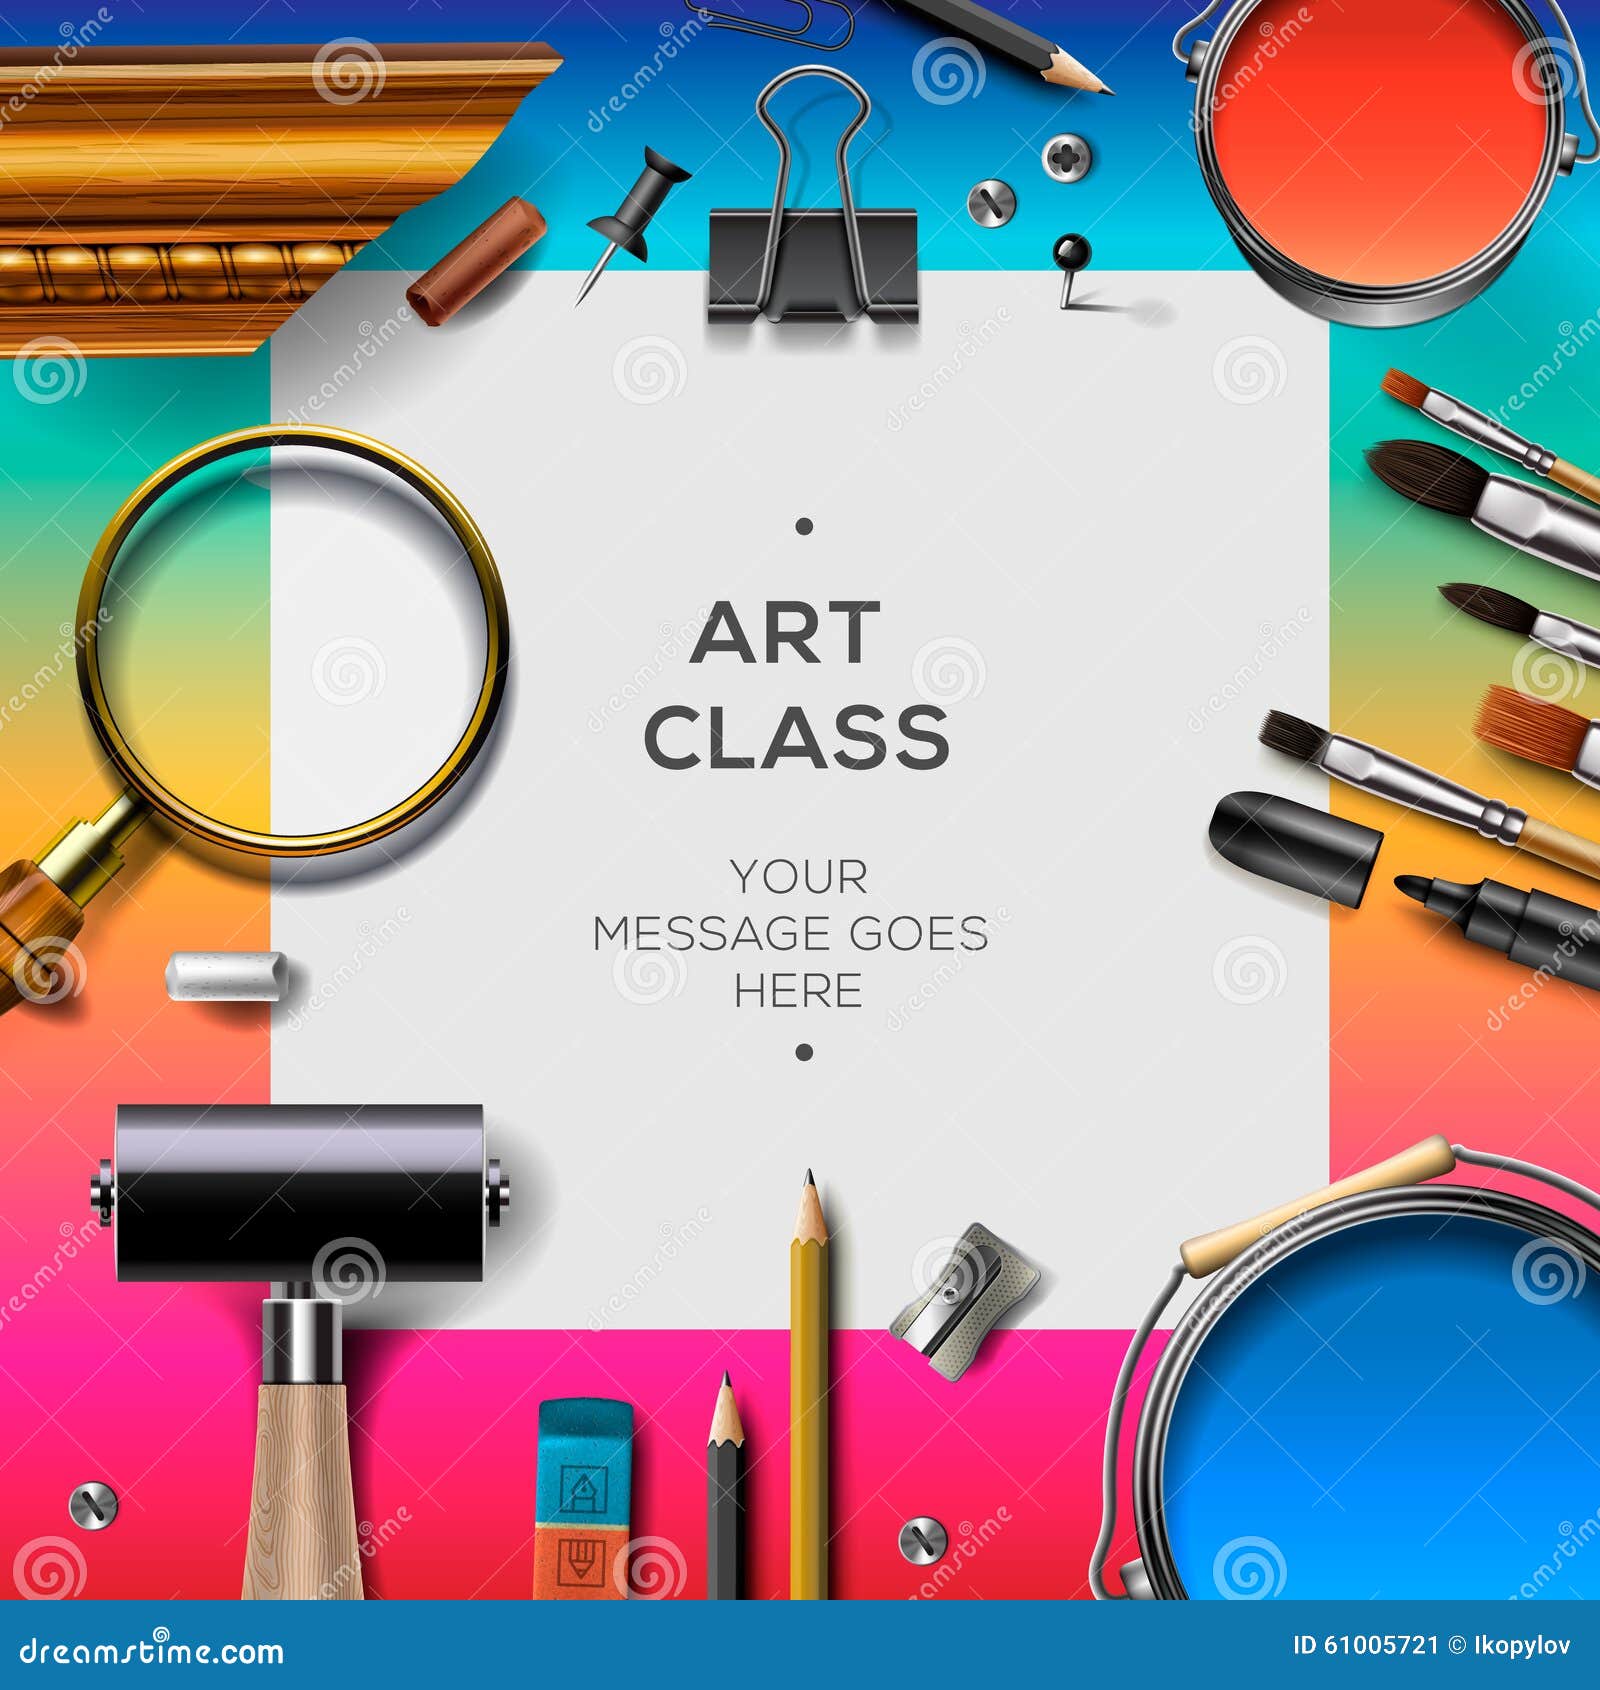 Art Class Template, Creativity Concept Stock Vector - Illustration of back,  advertising: 61005721